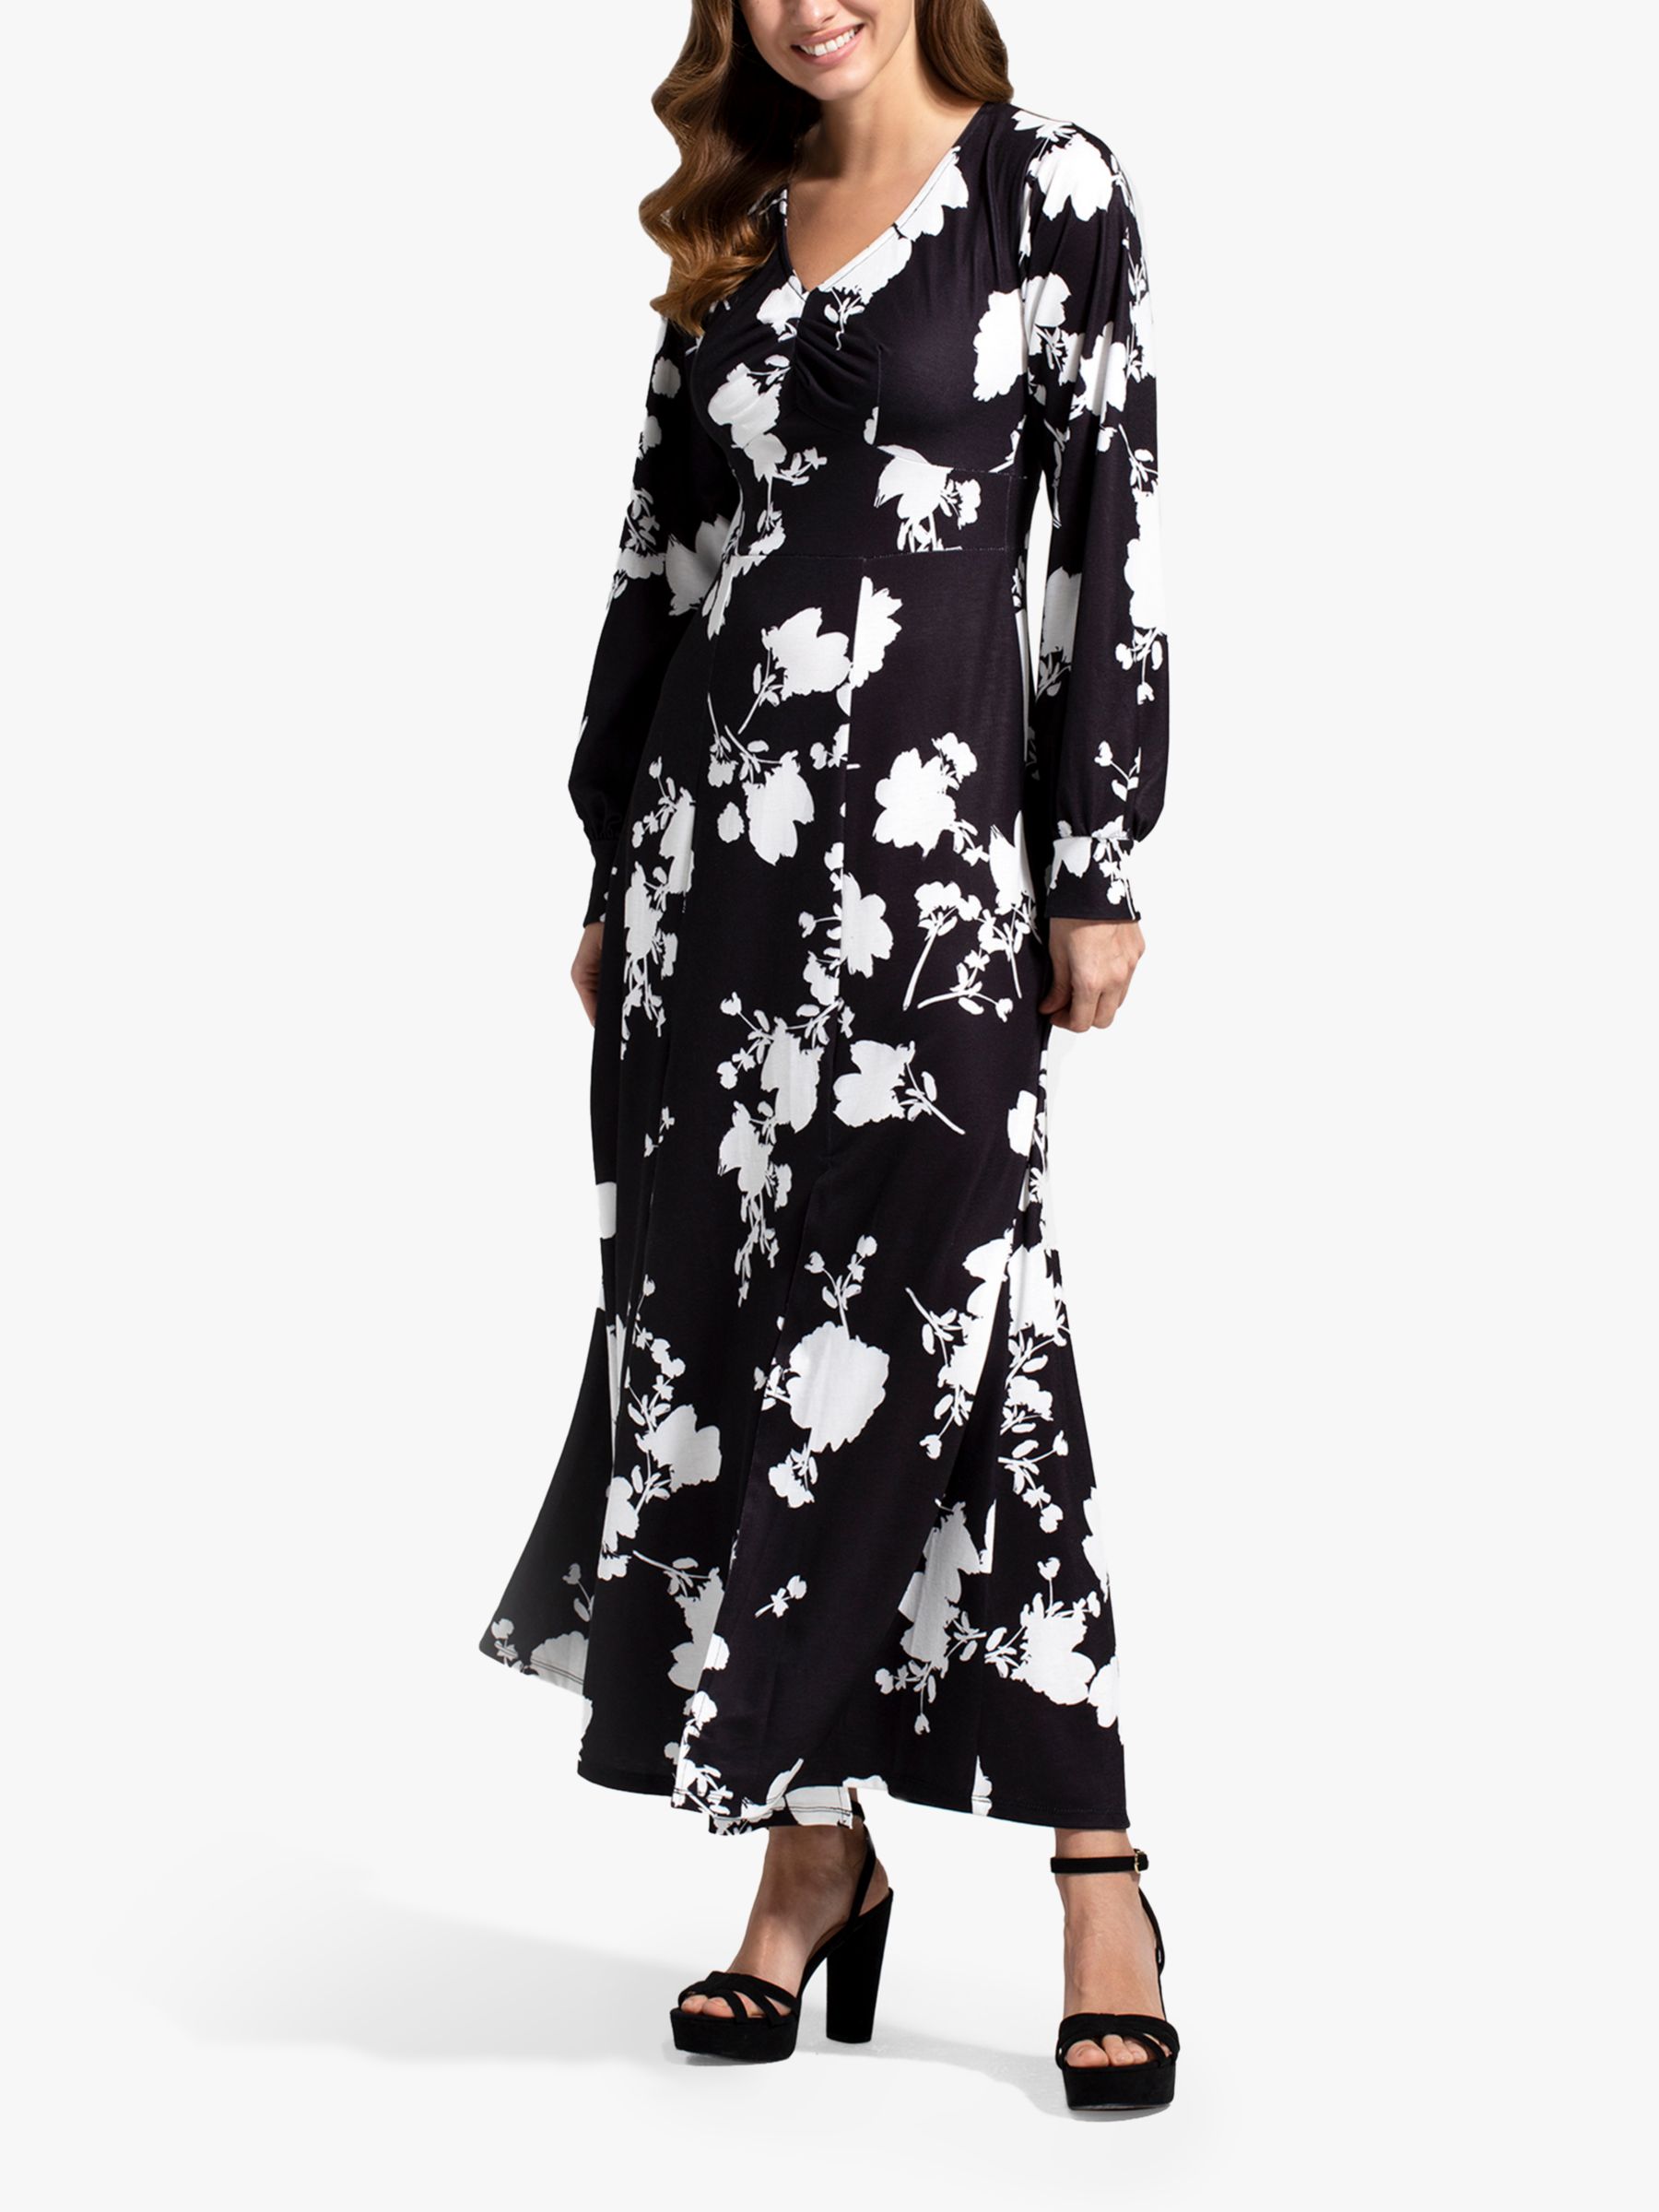 HotSquash Floral Chiffon Long Sleeve Maxi Dress, Black/White at